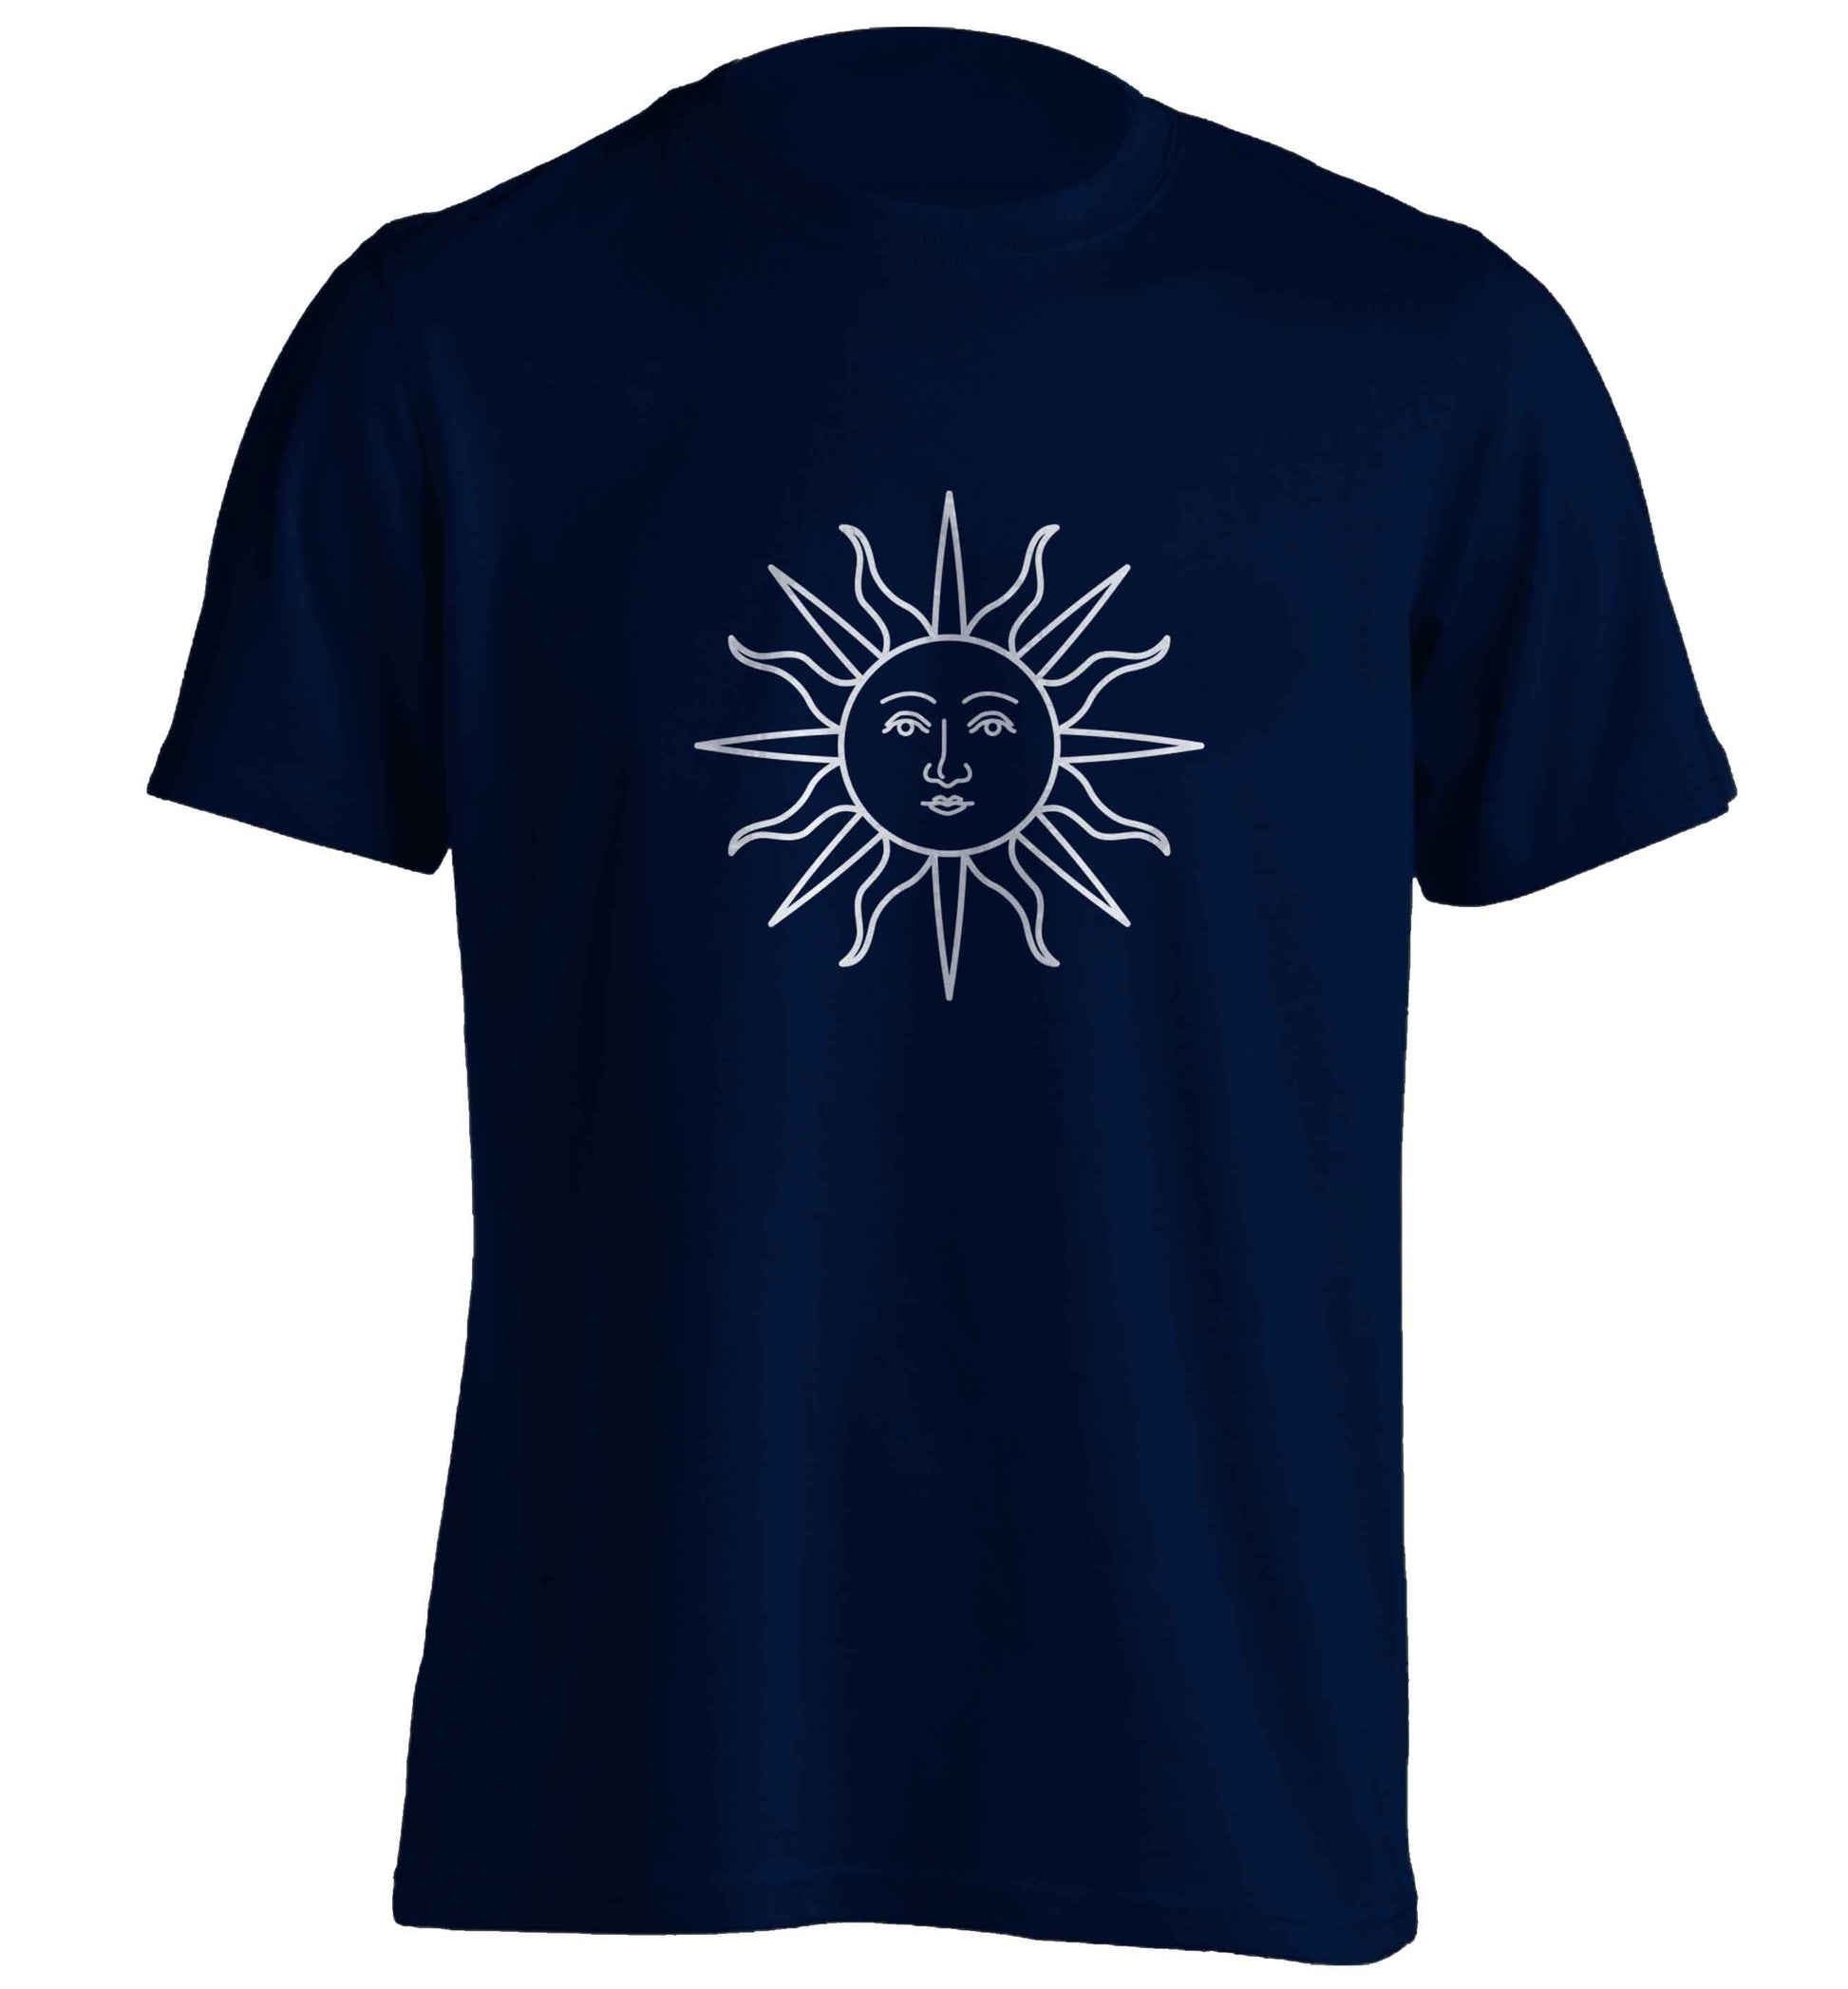 Sun face illustration adults unisex navy Tshirt 2XL